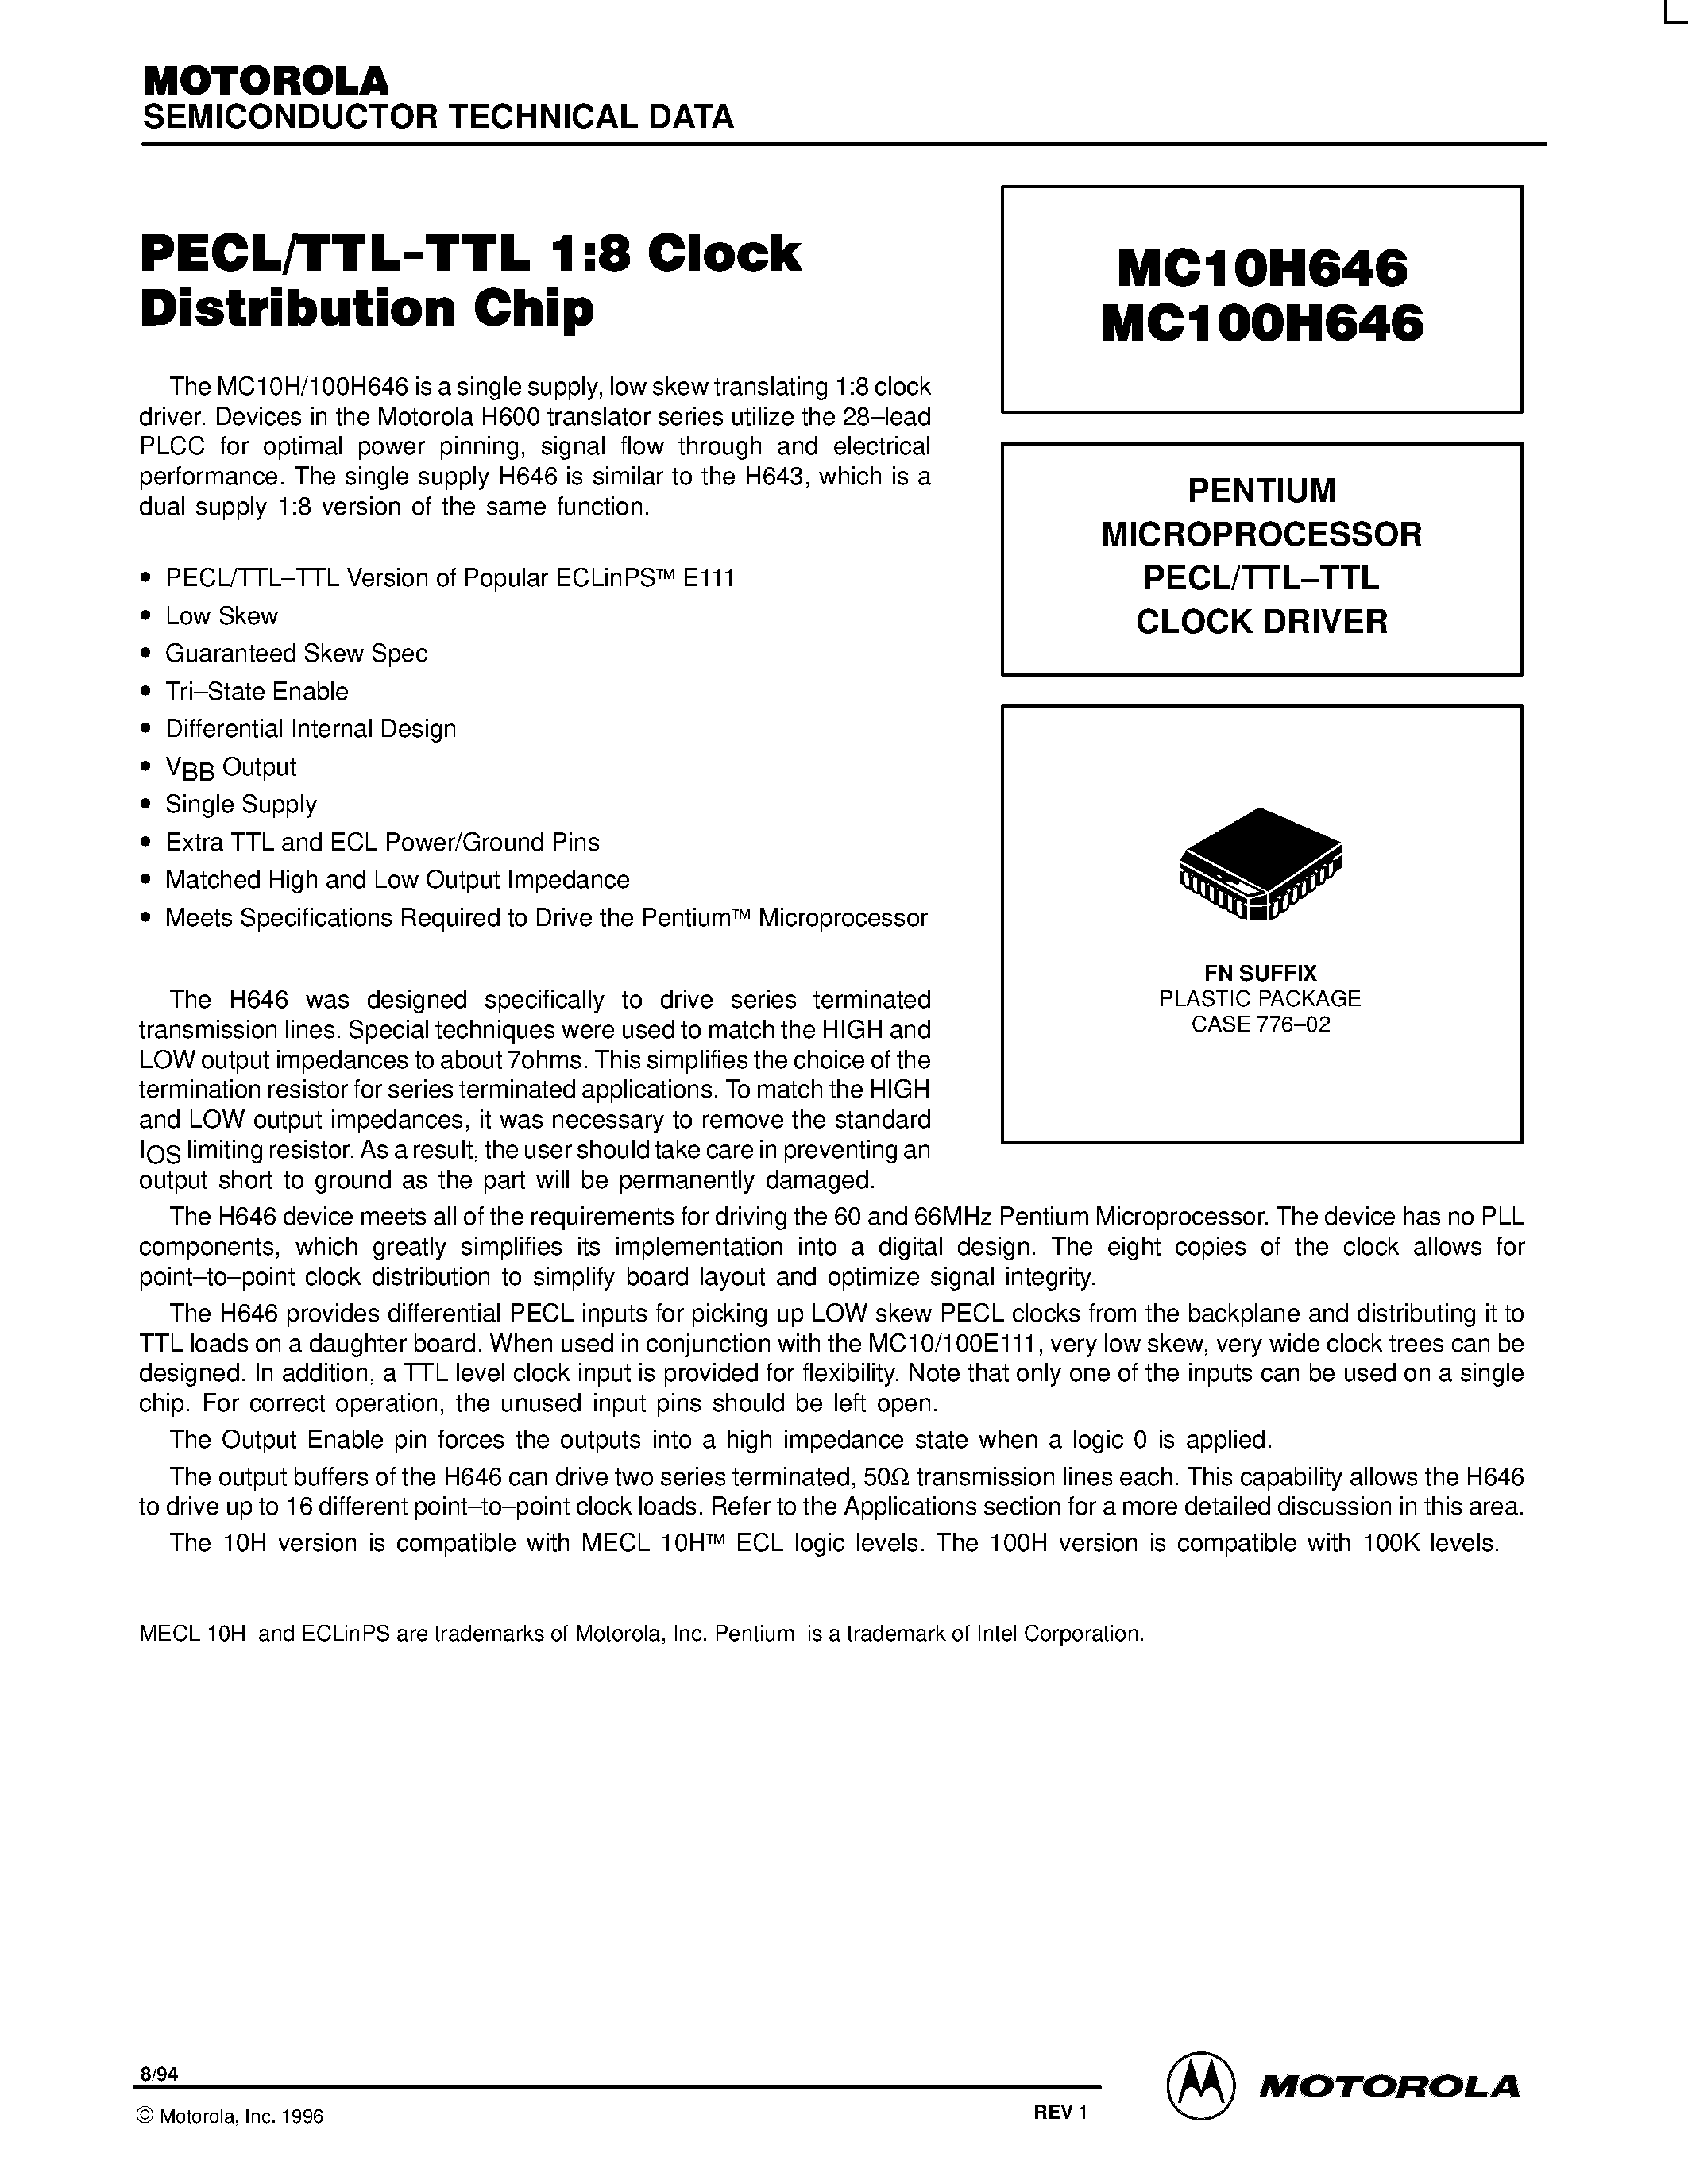 Datasheet MC10H646FN - PENTIUM MICROPROCESSOR PECL/TTL-TTL CLOCK DRIVER page 1